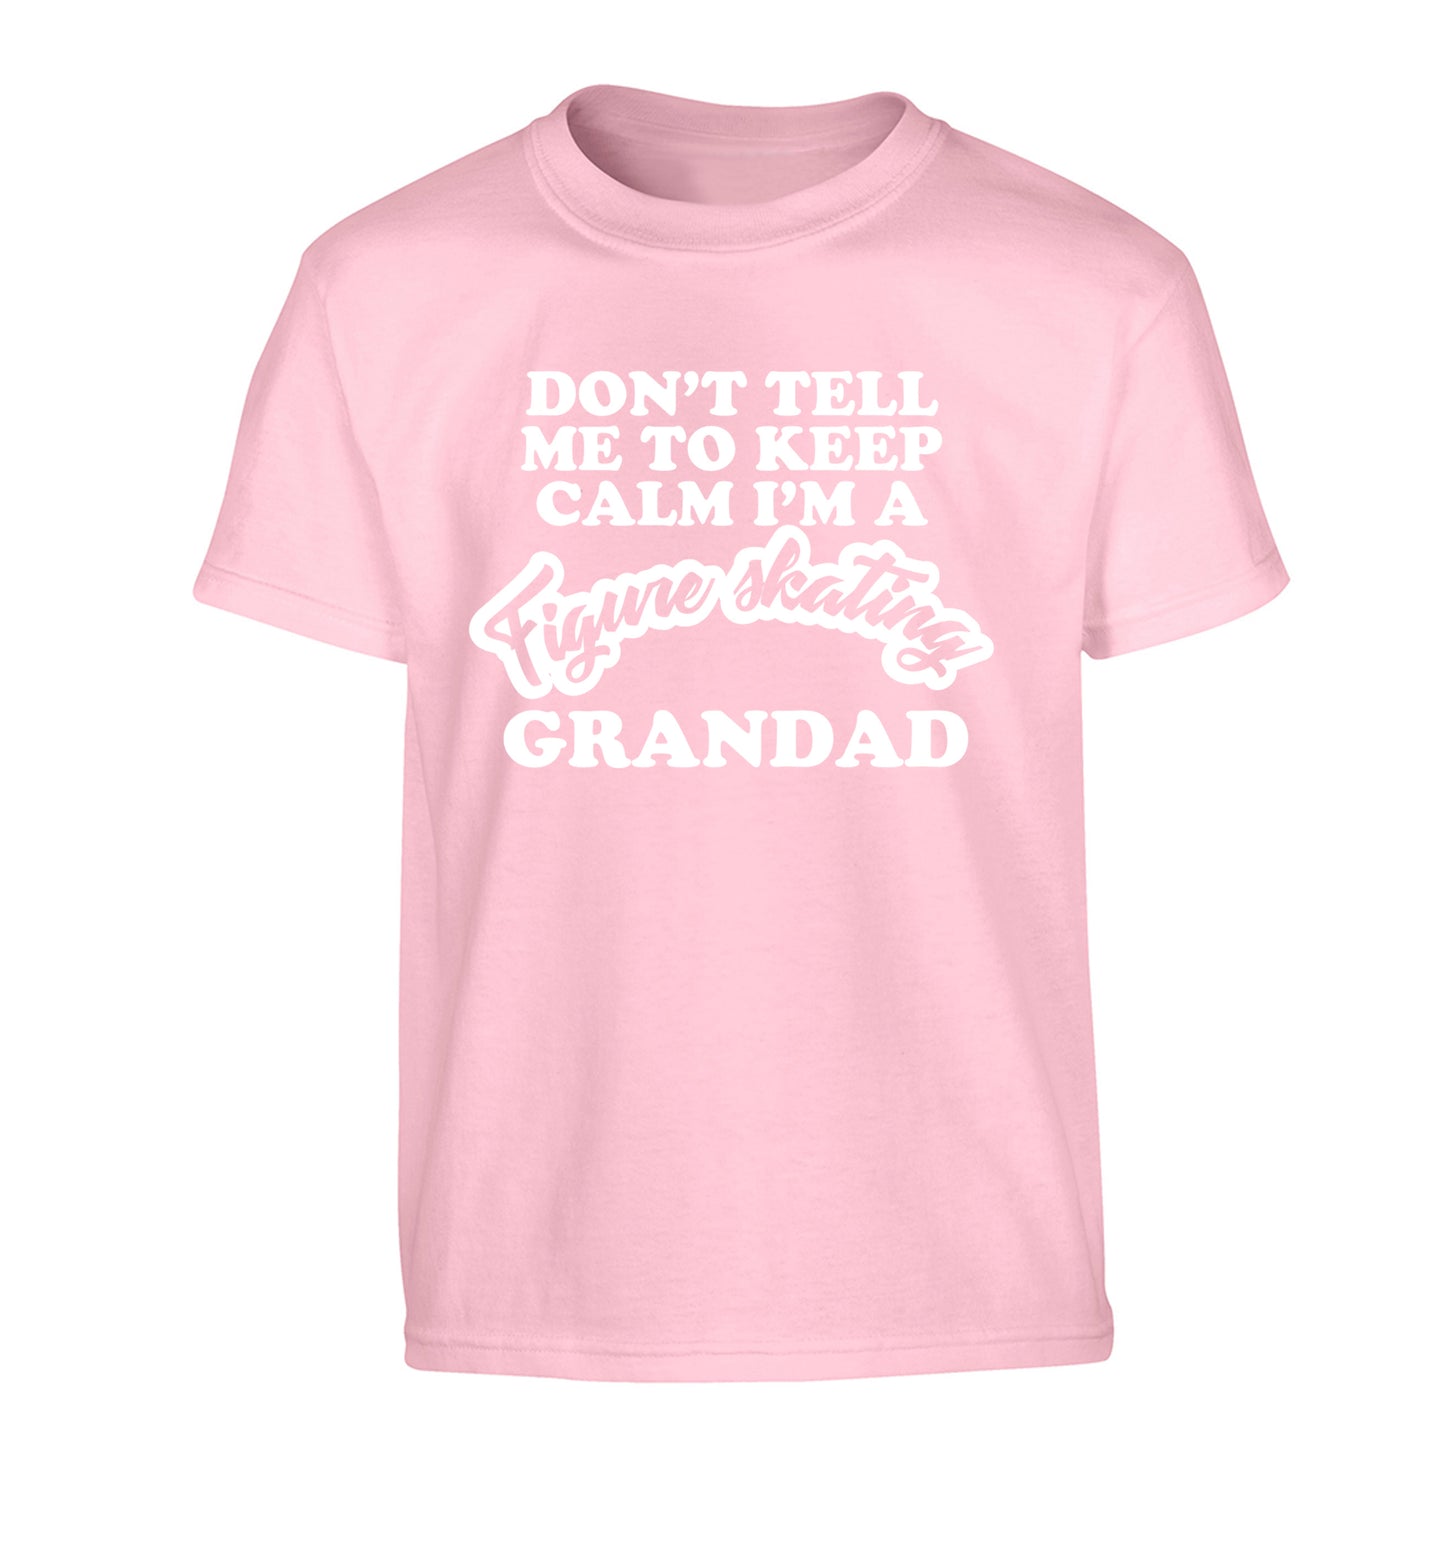 Don't tell me to keep calm I'm a figure skating grandad Children's light pink Tshirt 12-14 Years